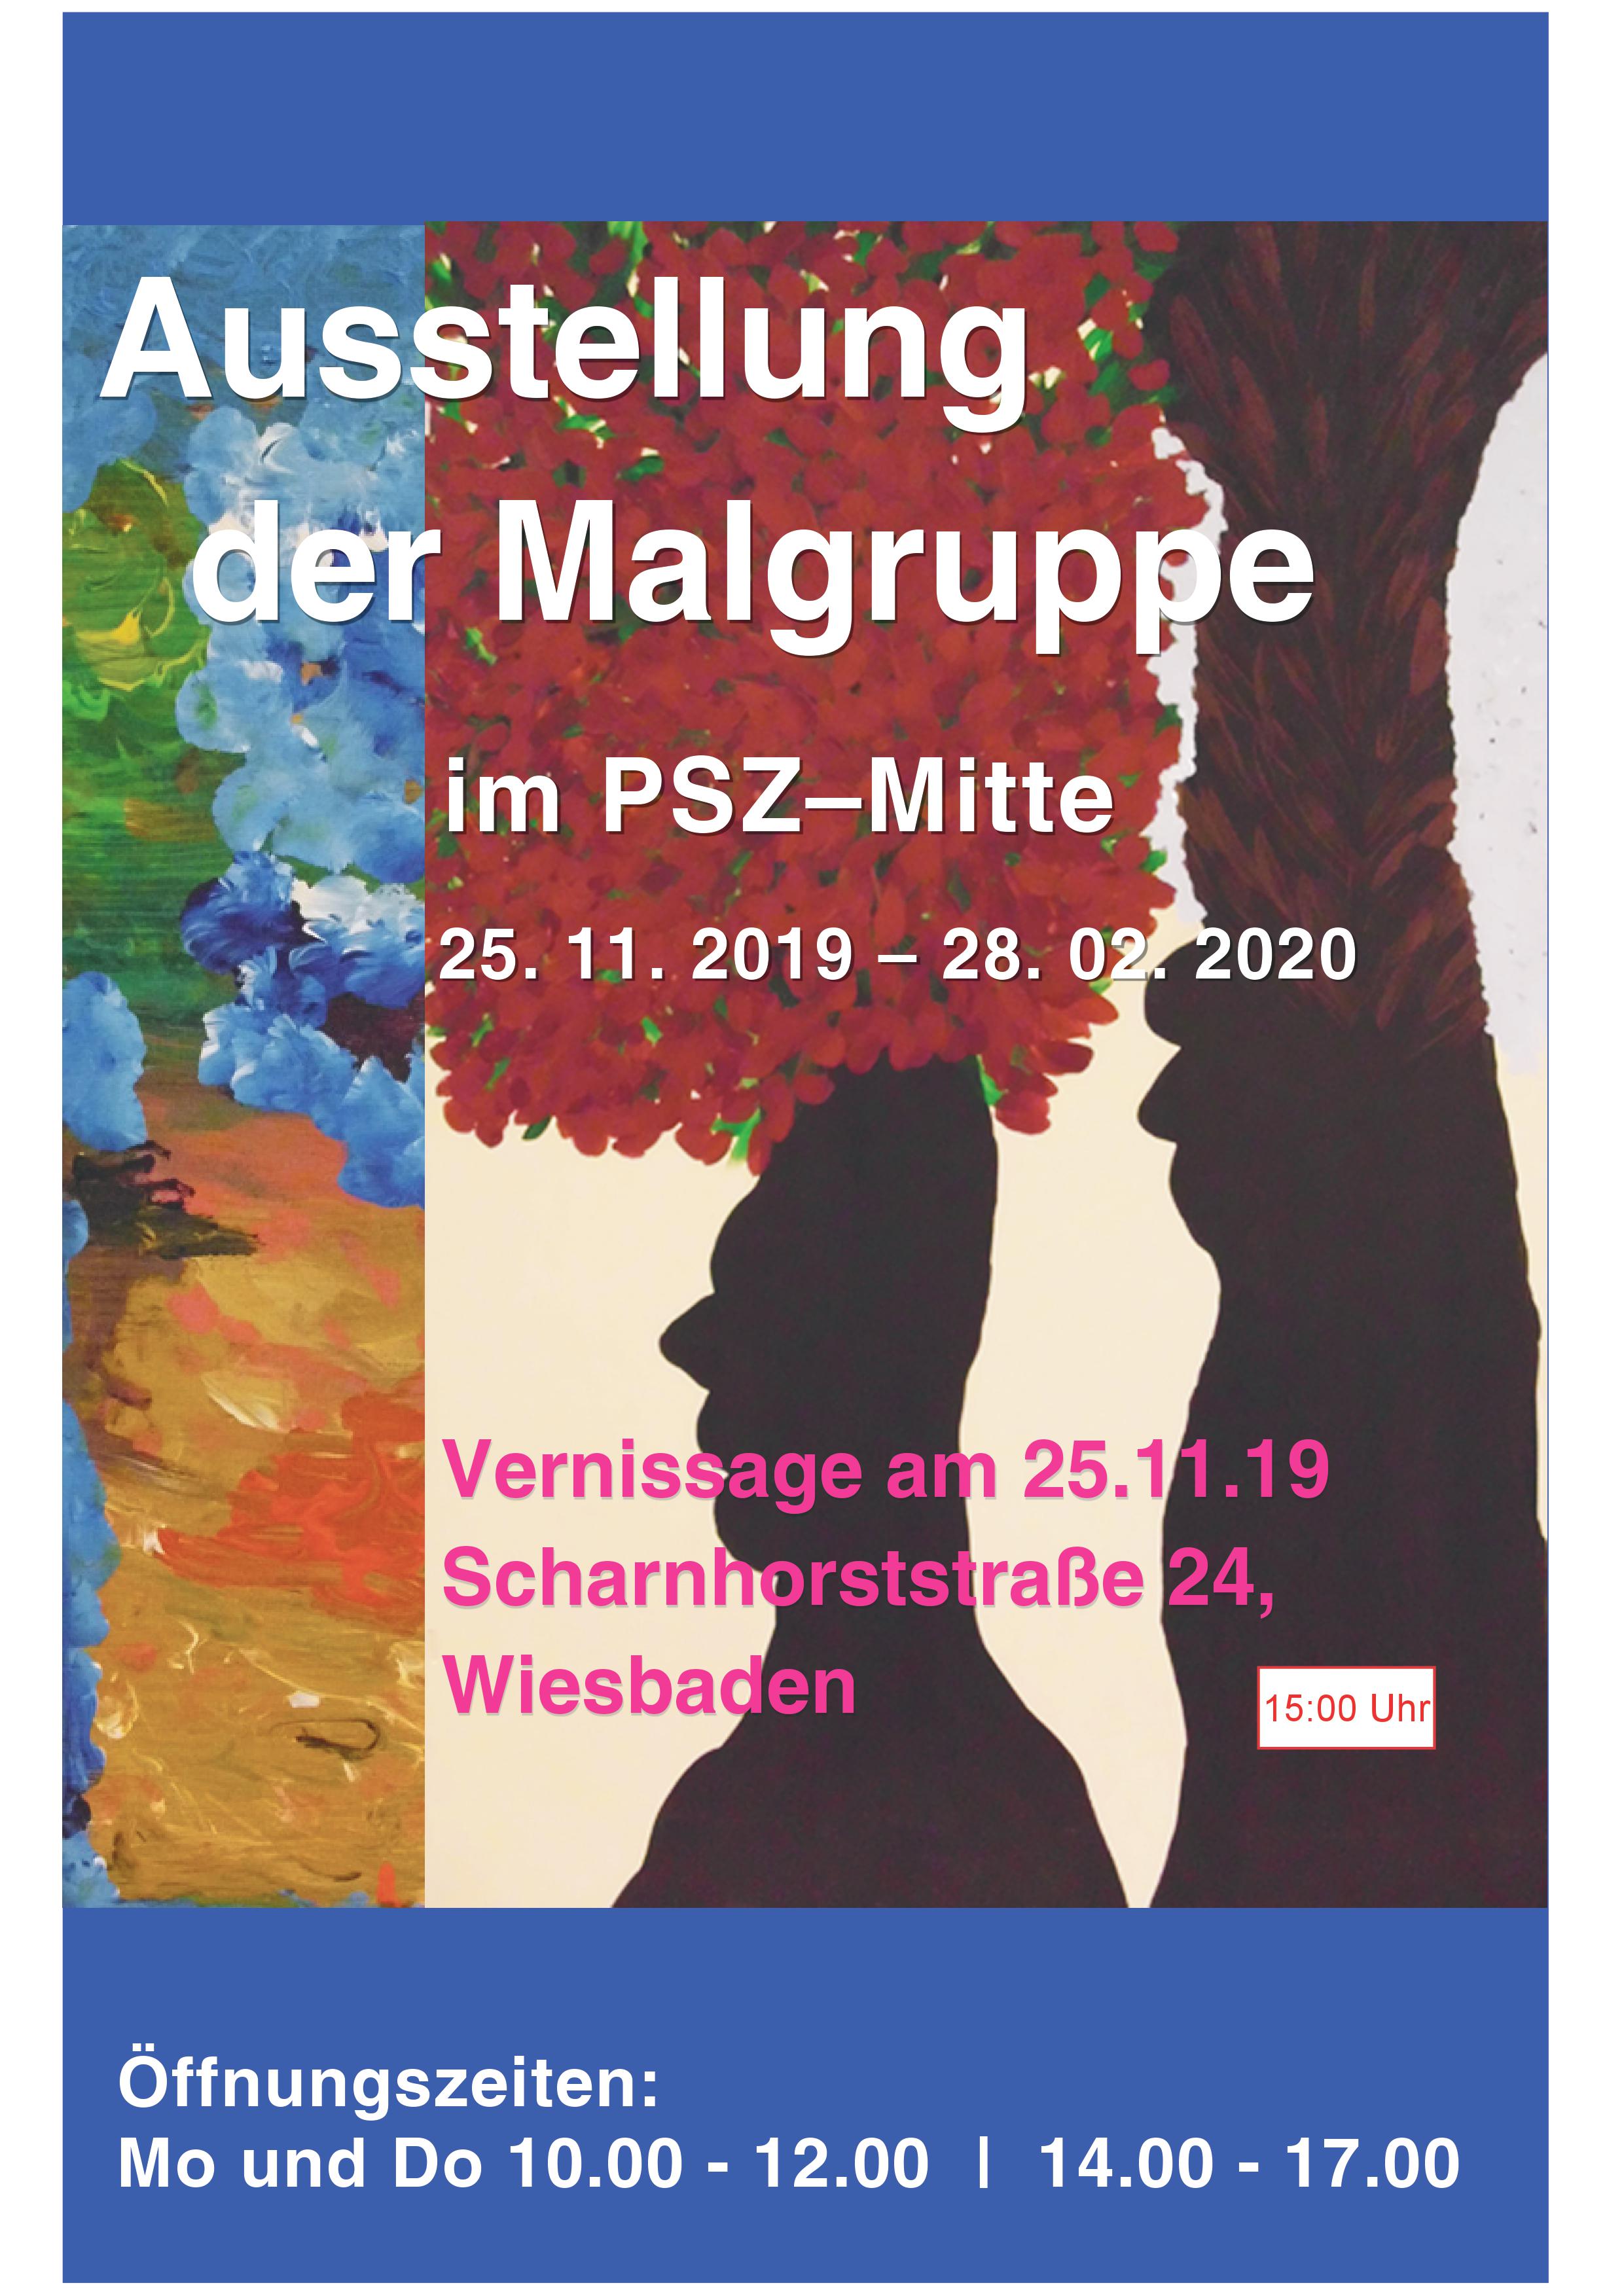 werkgemeinschaft_Aktuelles_PSZ Mitte_Aussstellung Malgruppe 2019